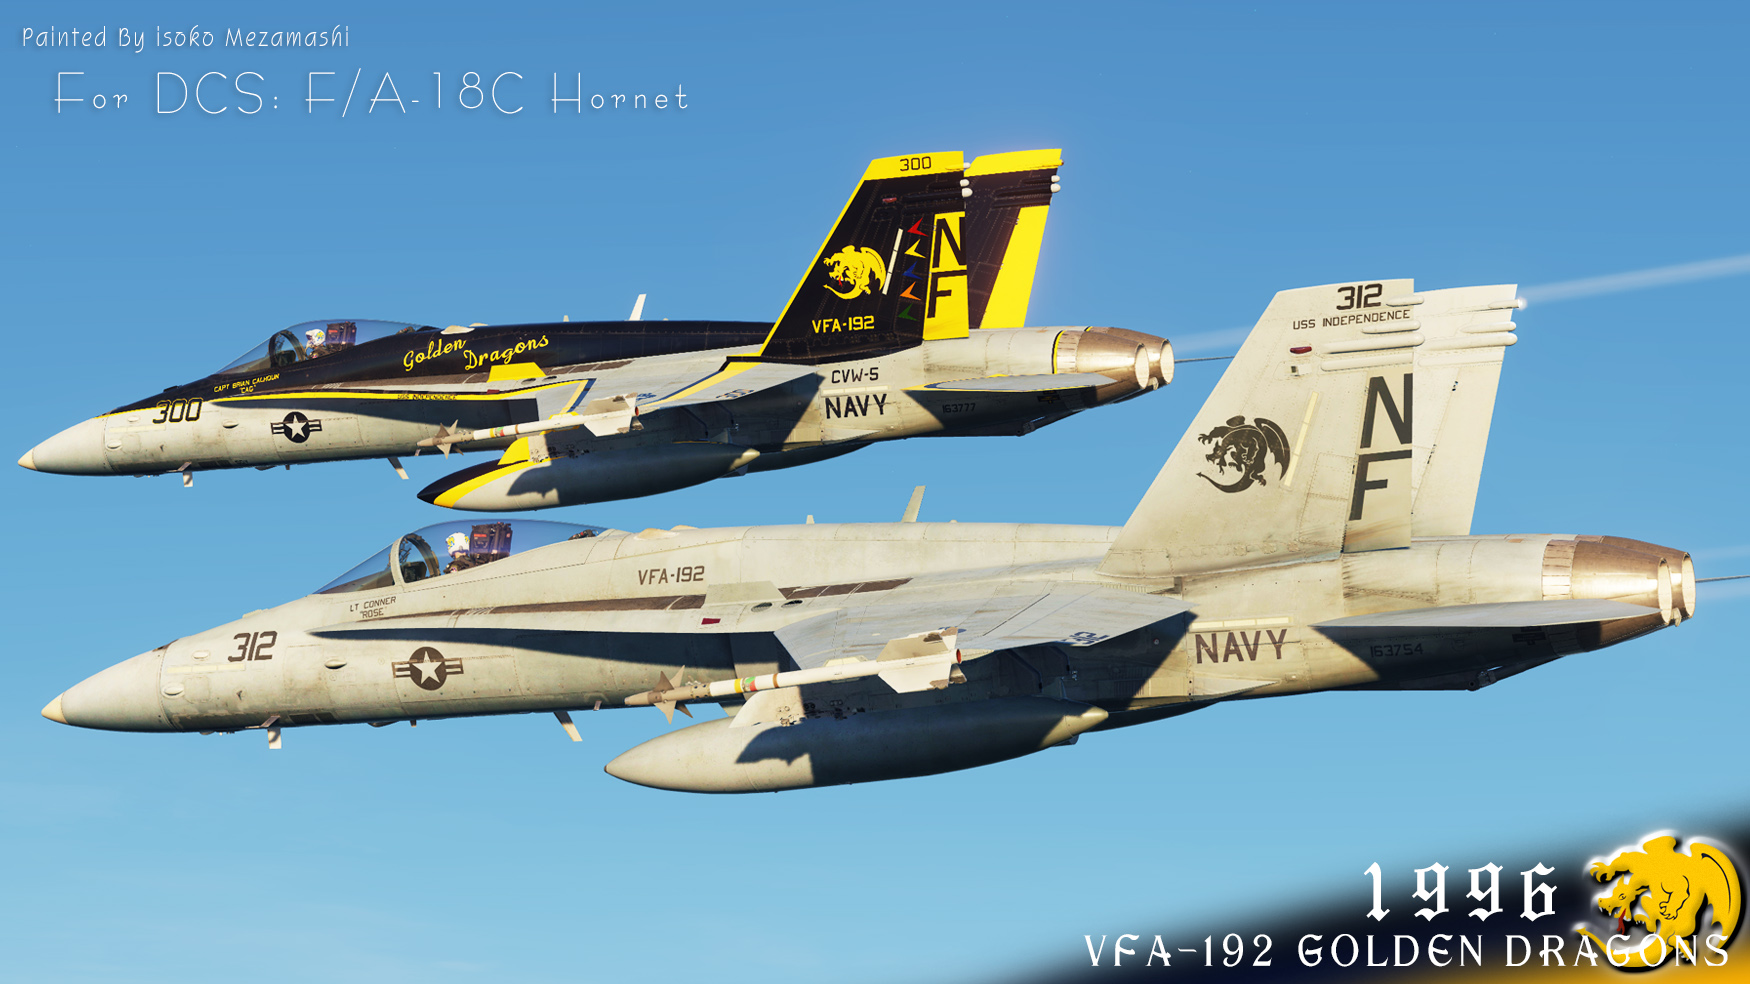 F/A-18C HORNET "VFA-192 GOLDEN DRAGONS" 1996 v1.0